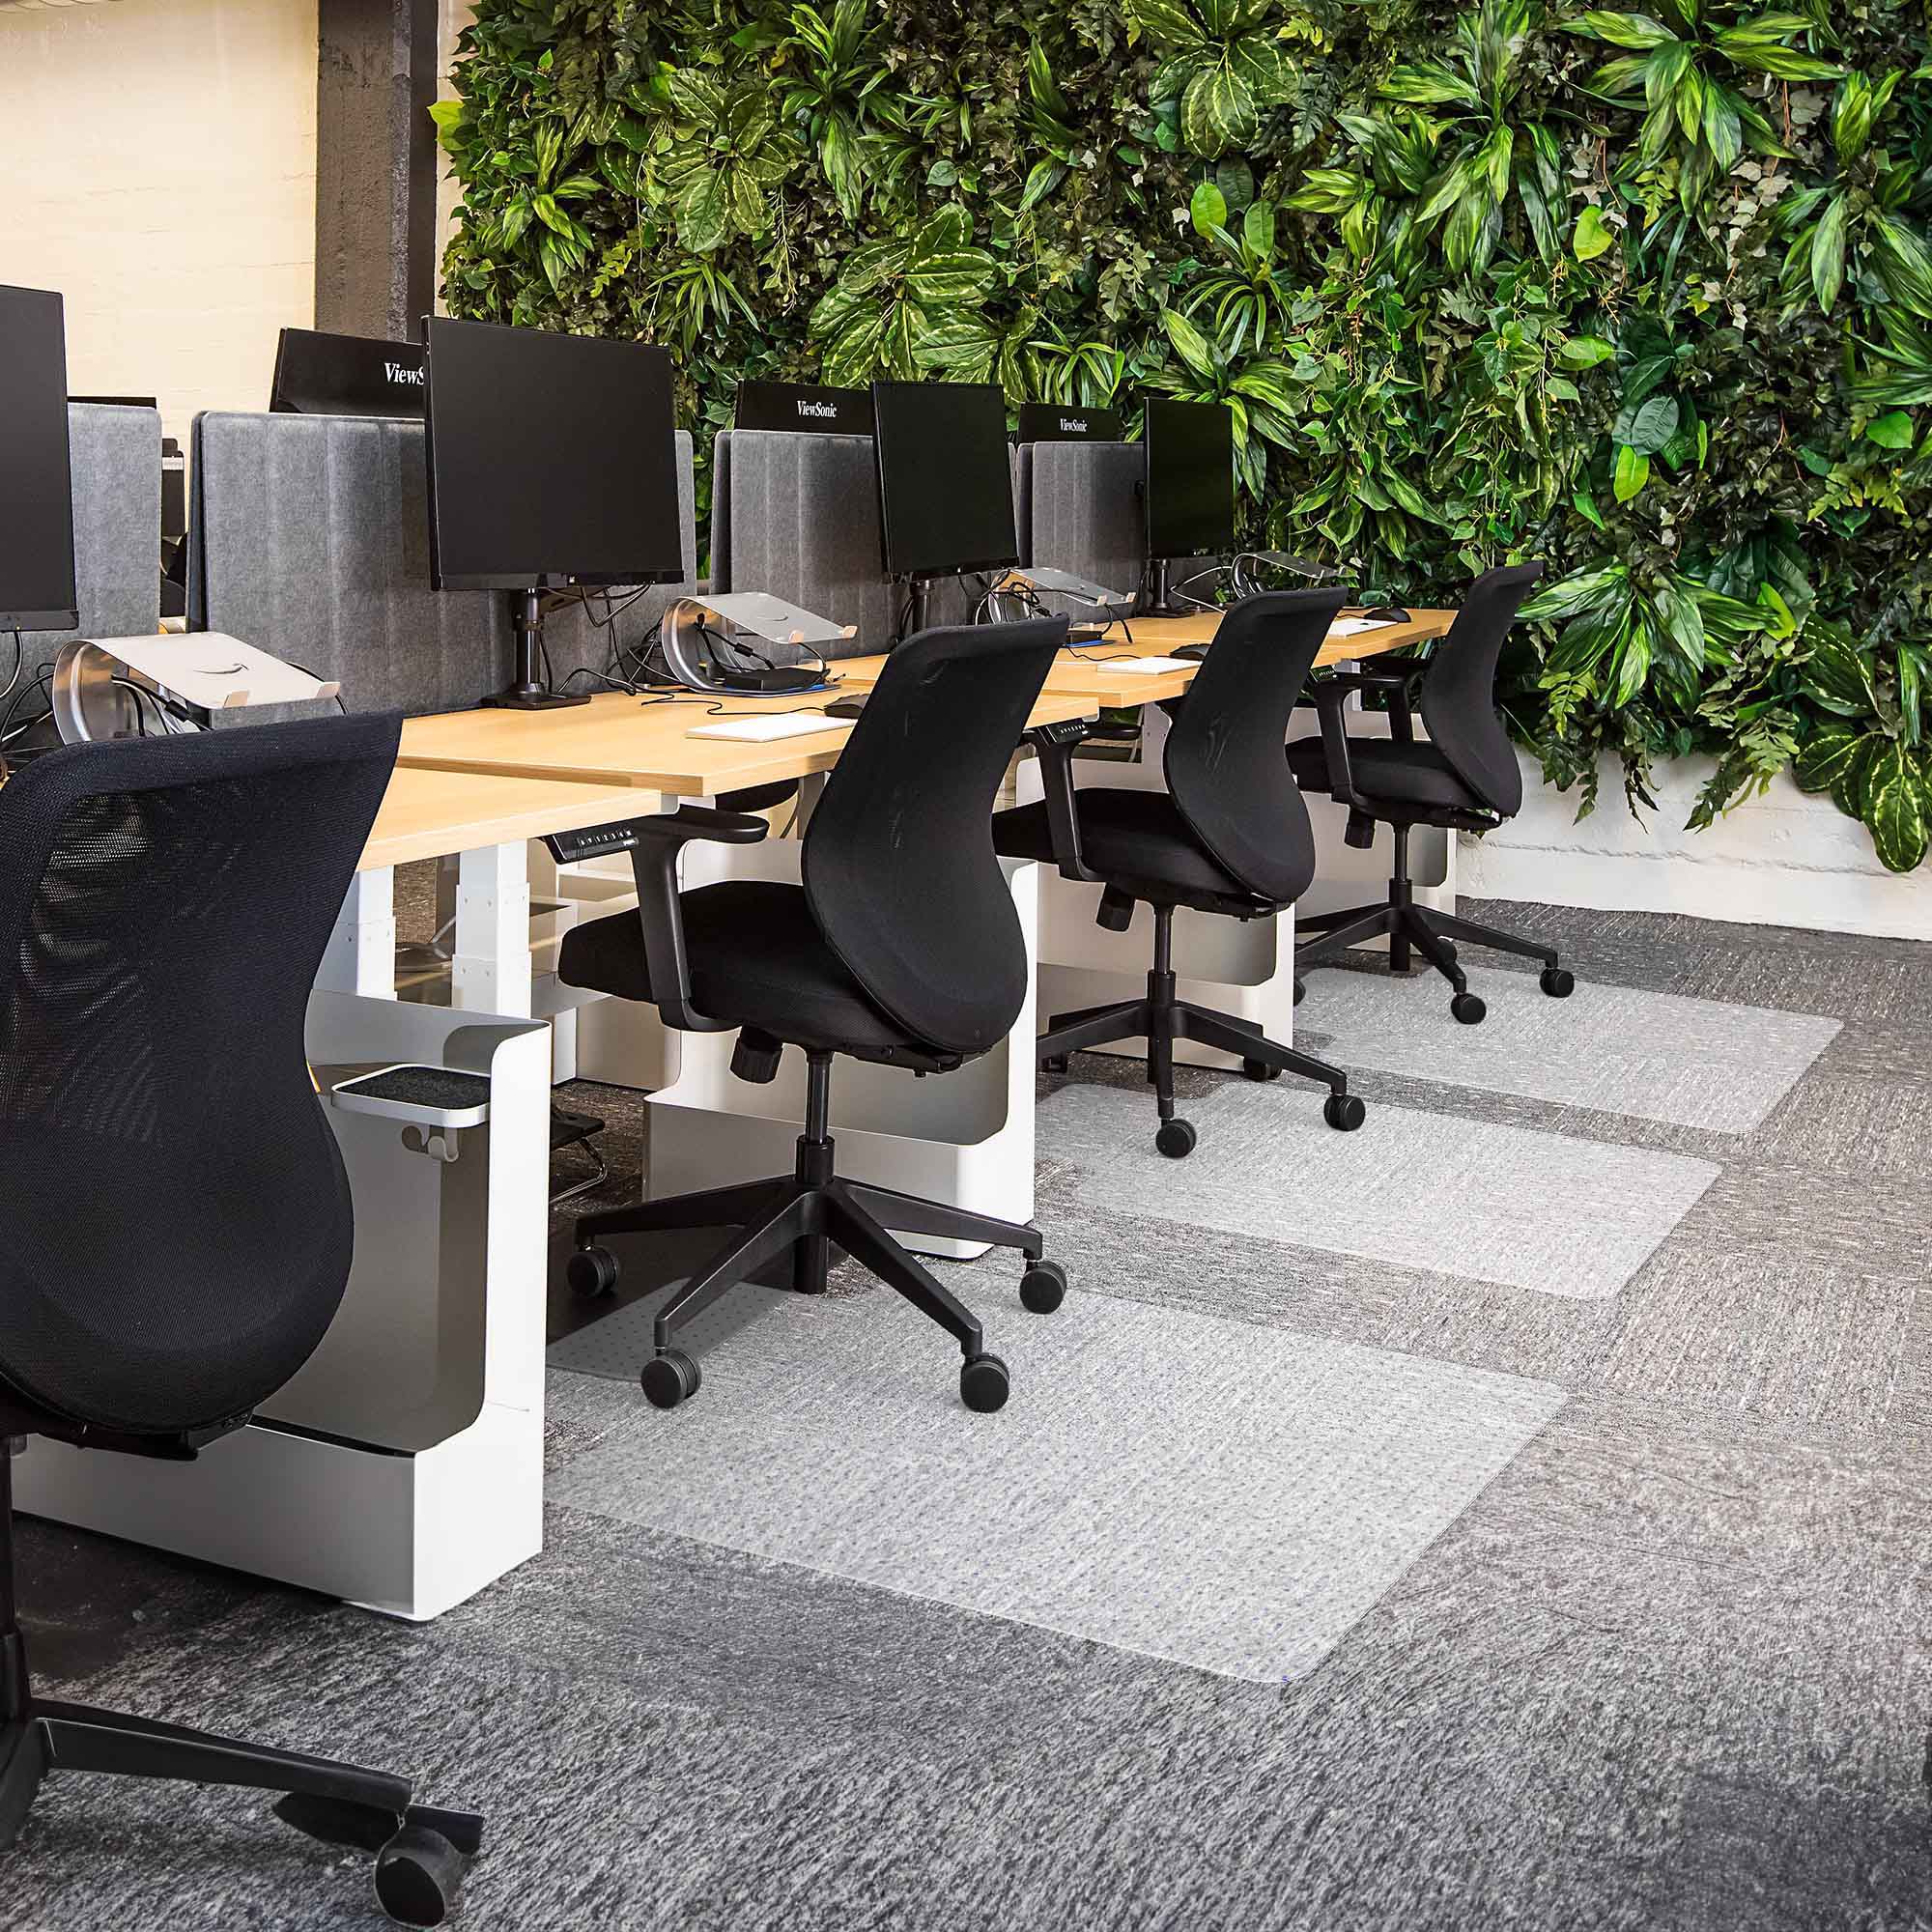  HOMEK Office Chair Mat for Carpeted Floors - Clear